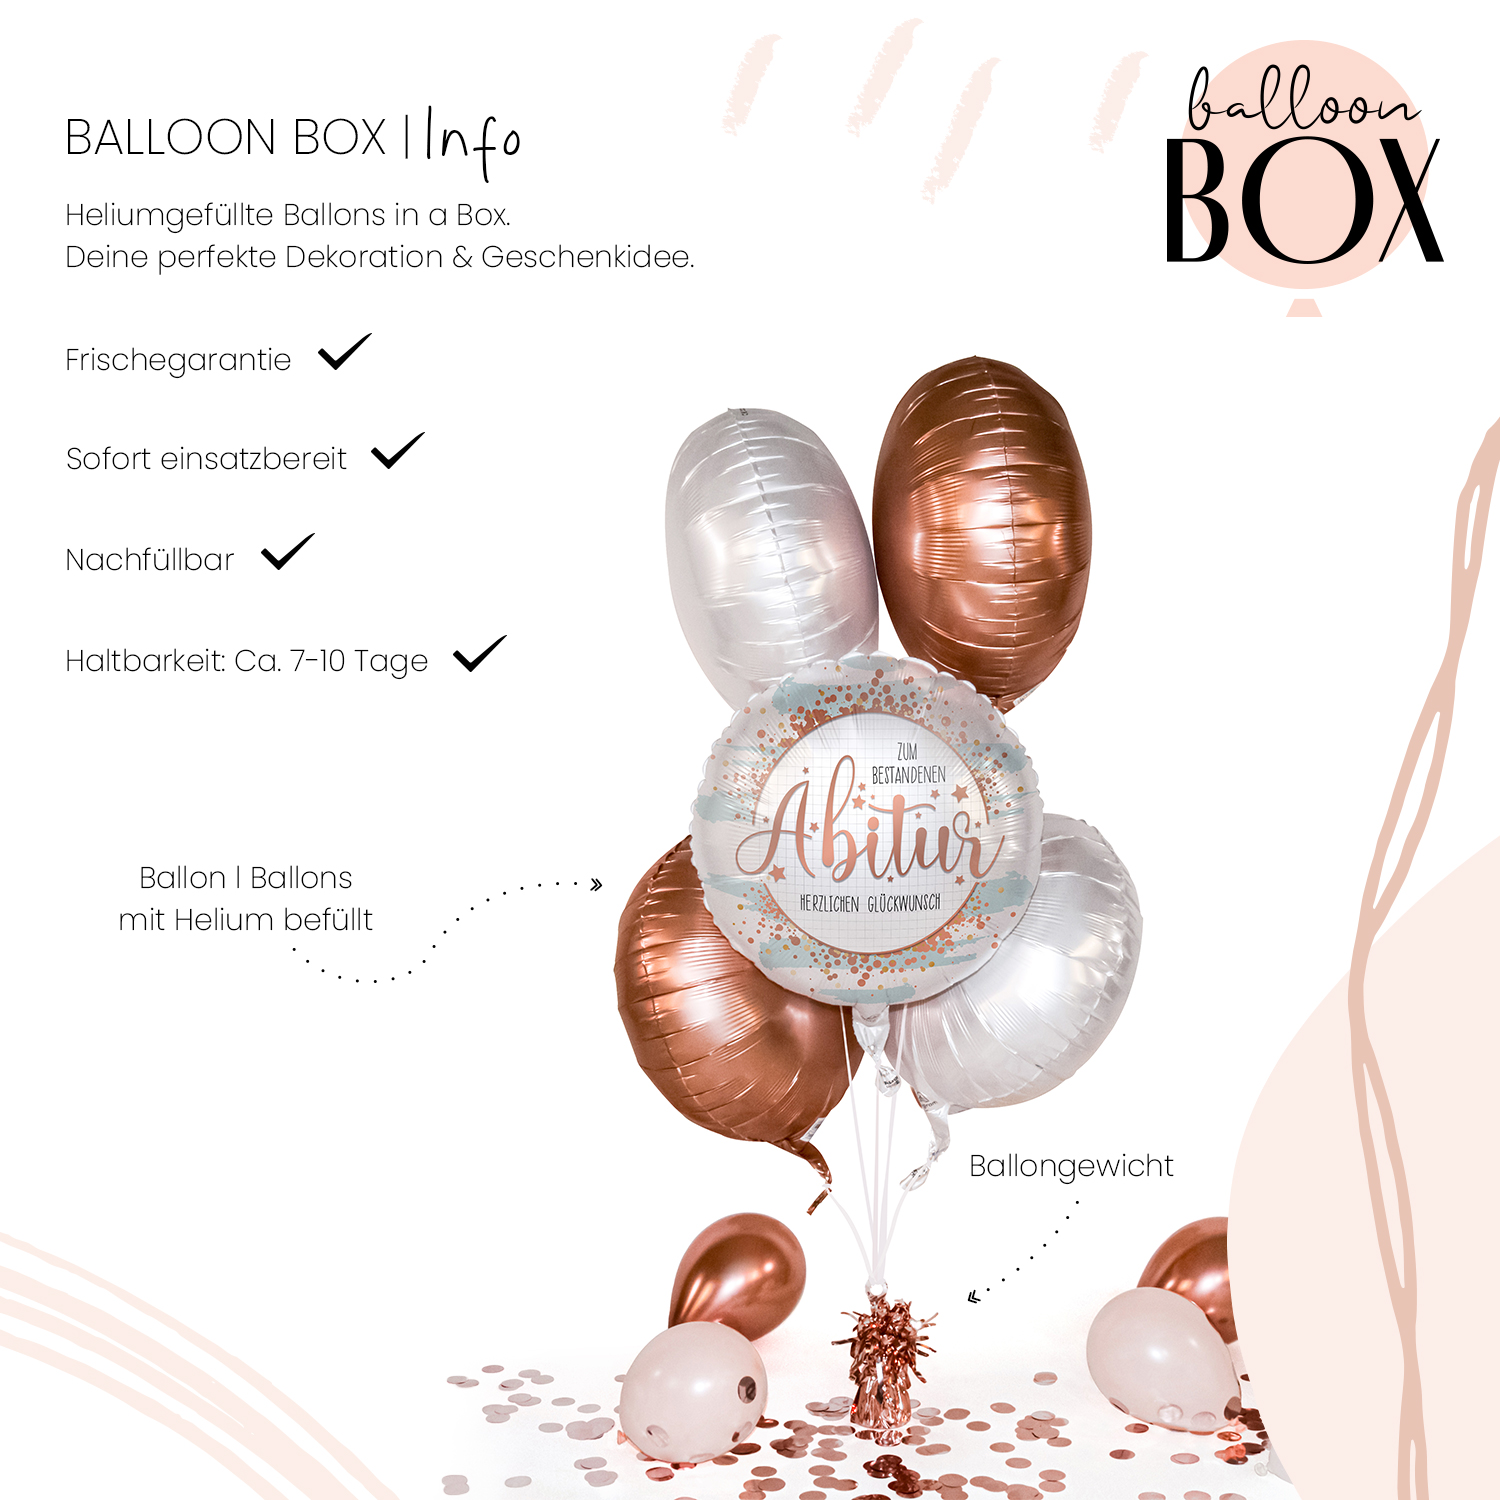 Heliumballon in a Box - Abitur Glückwunsch